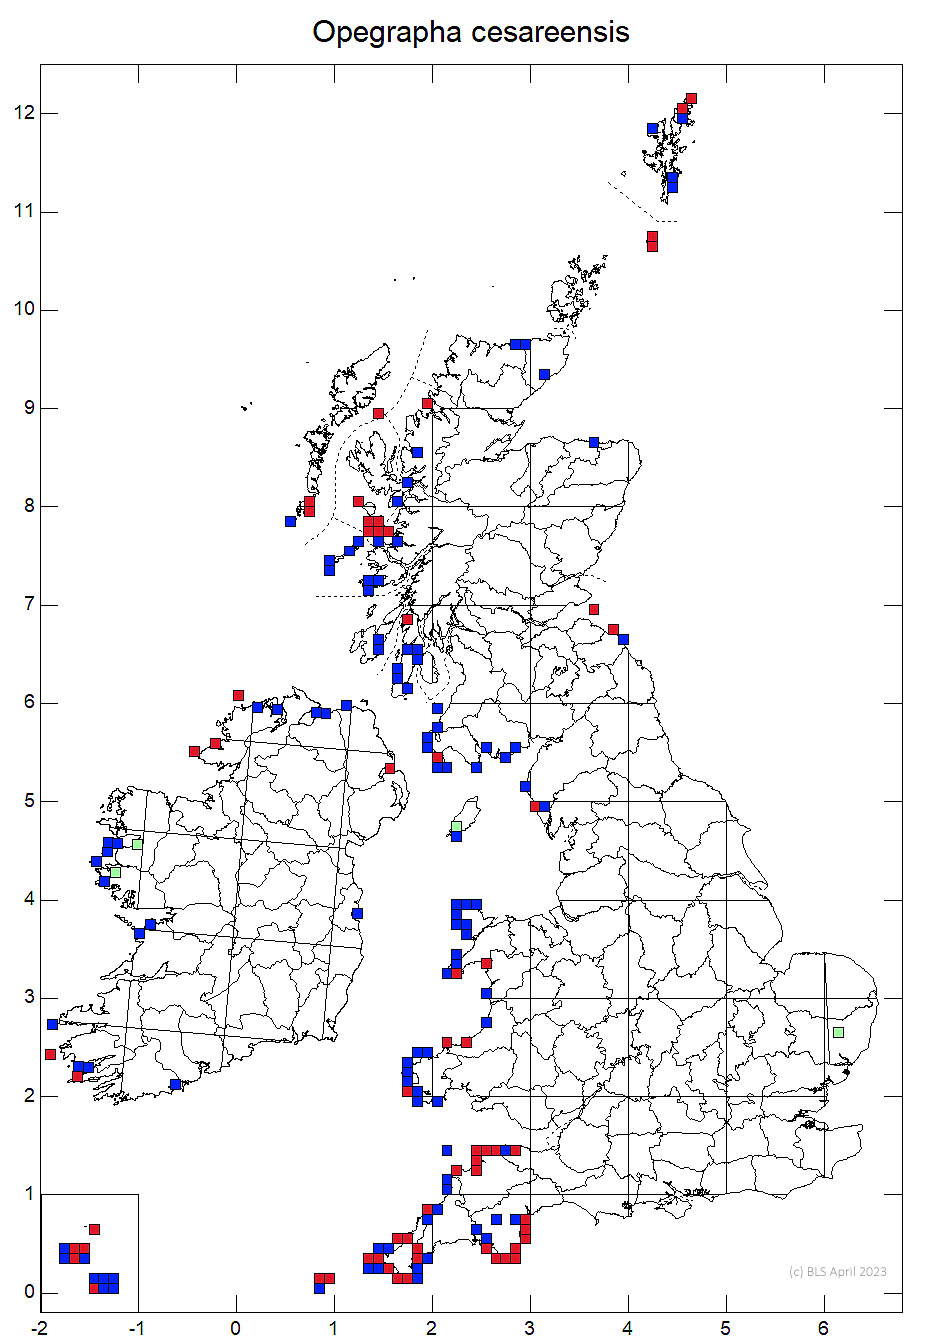 Opegrapha cesareensis 10km sq distribution map